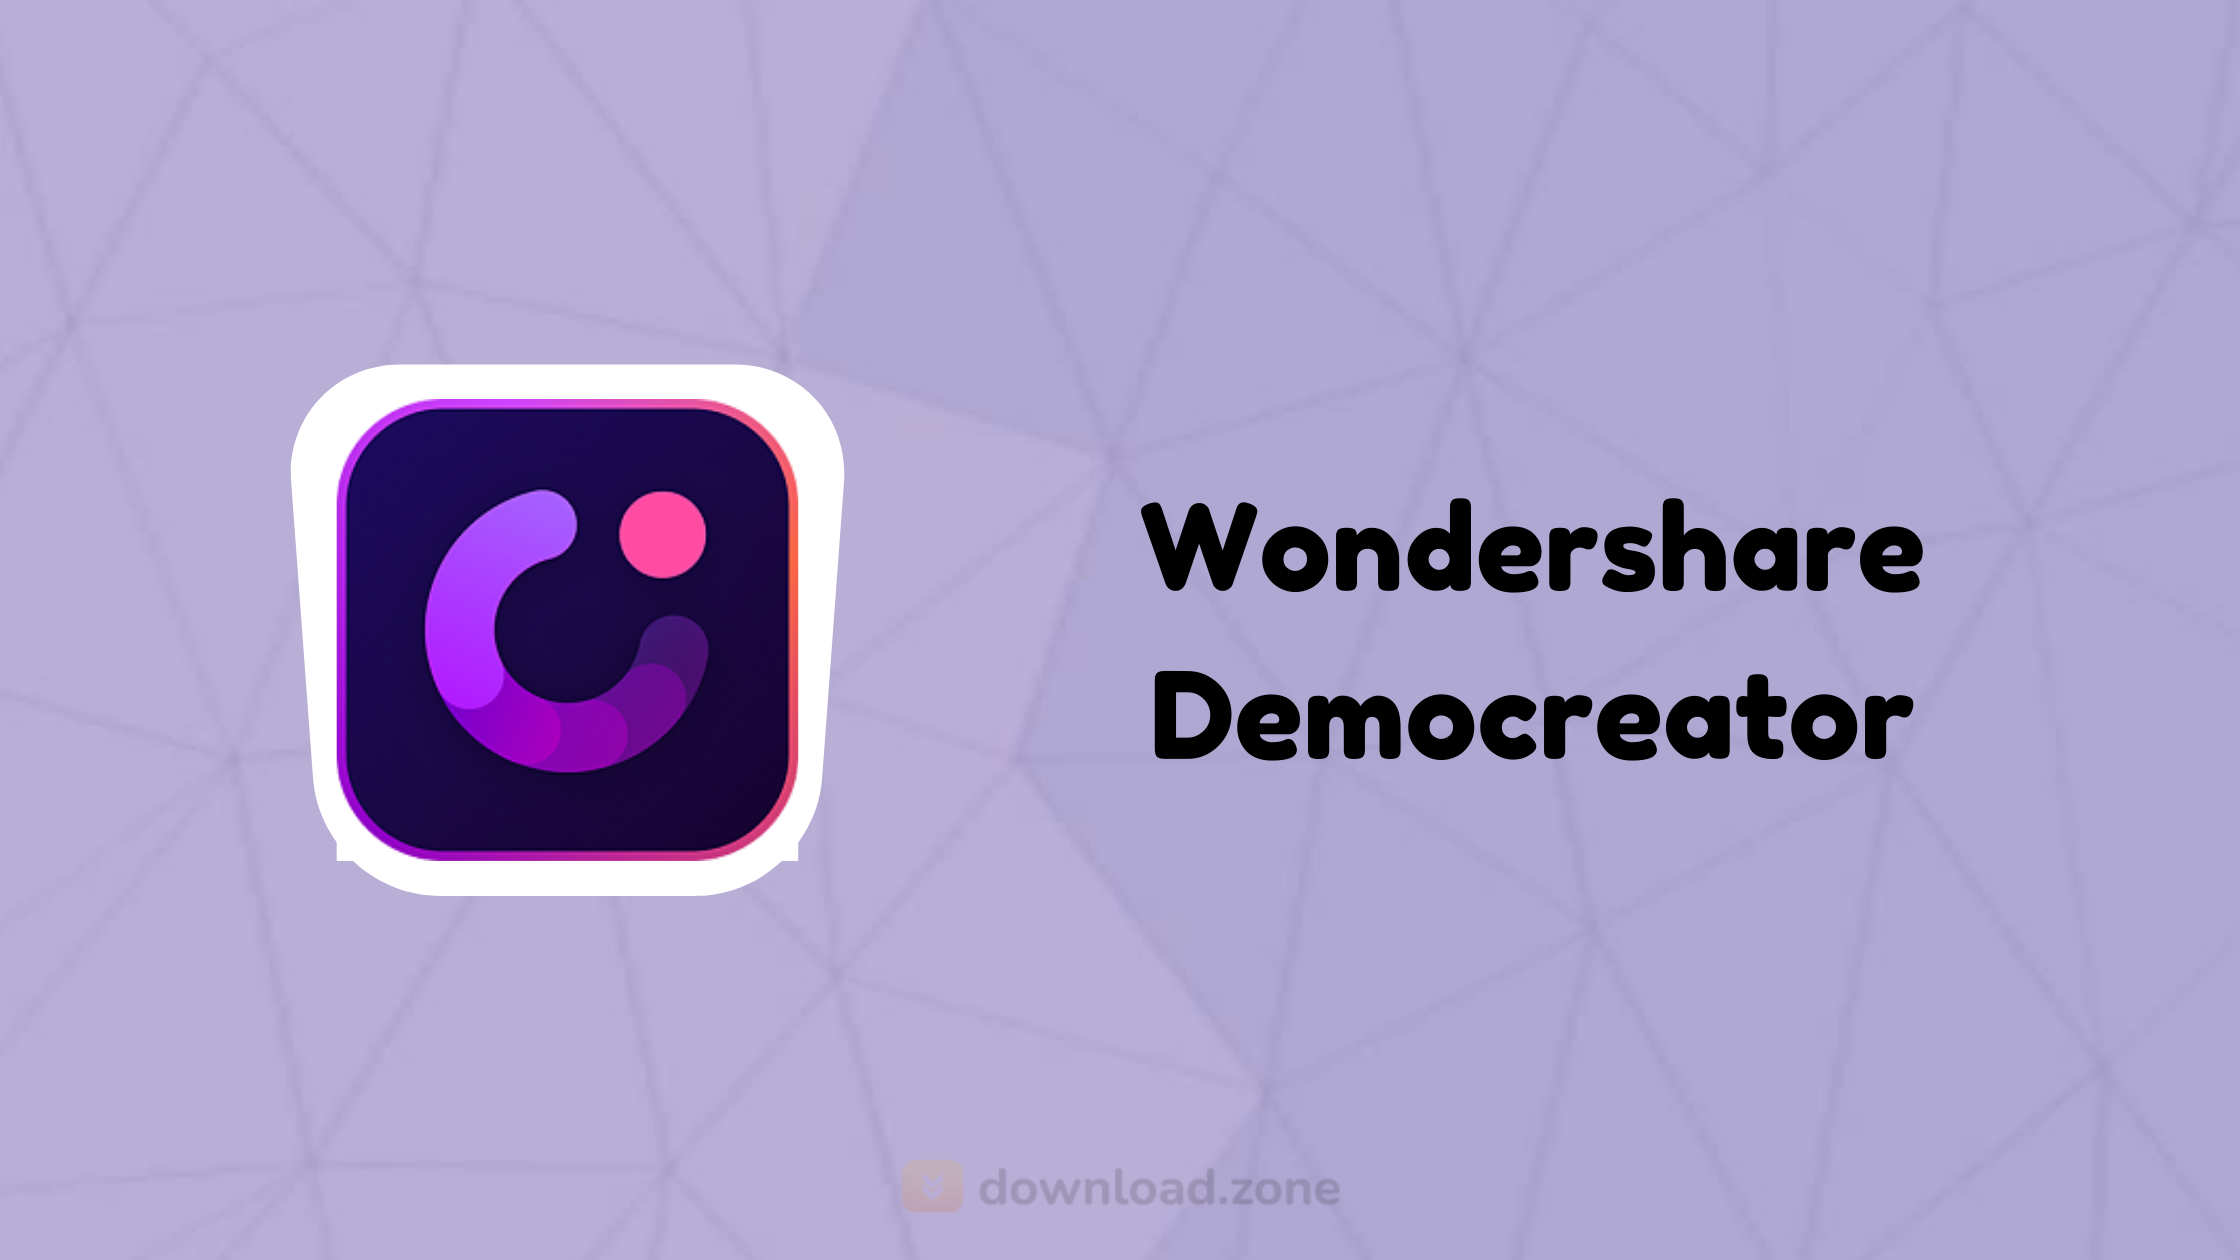 download wondershare democreator for free